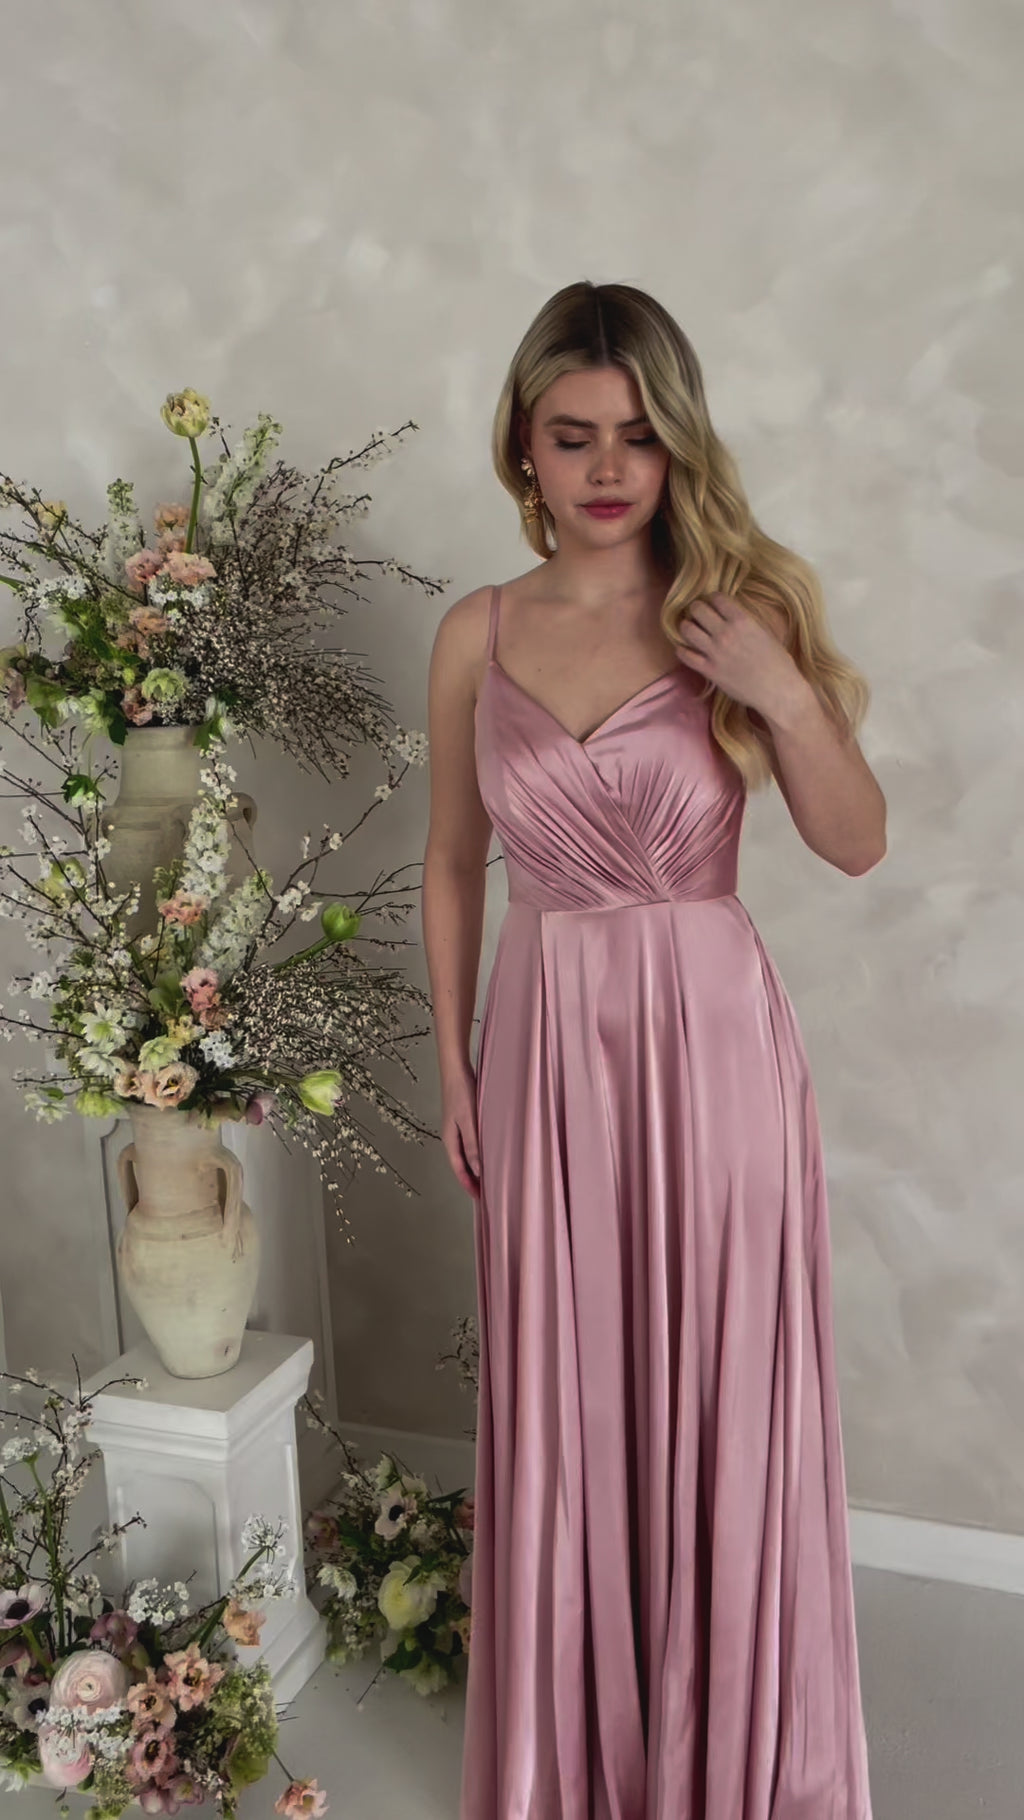 TH&TH Isla blush pink satin ladies bridesmaids dress